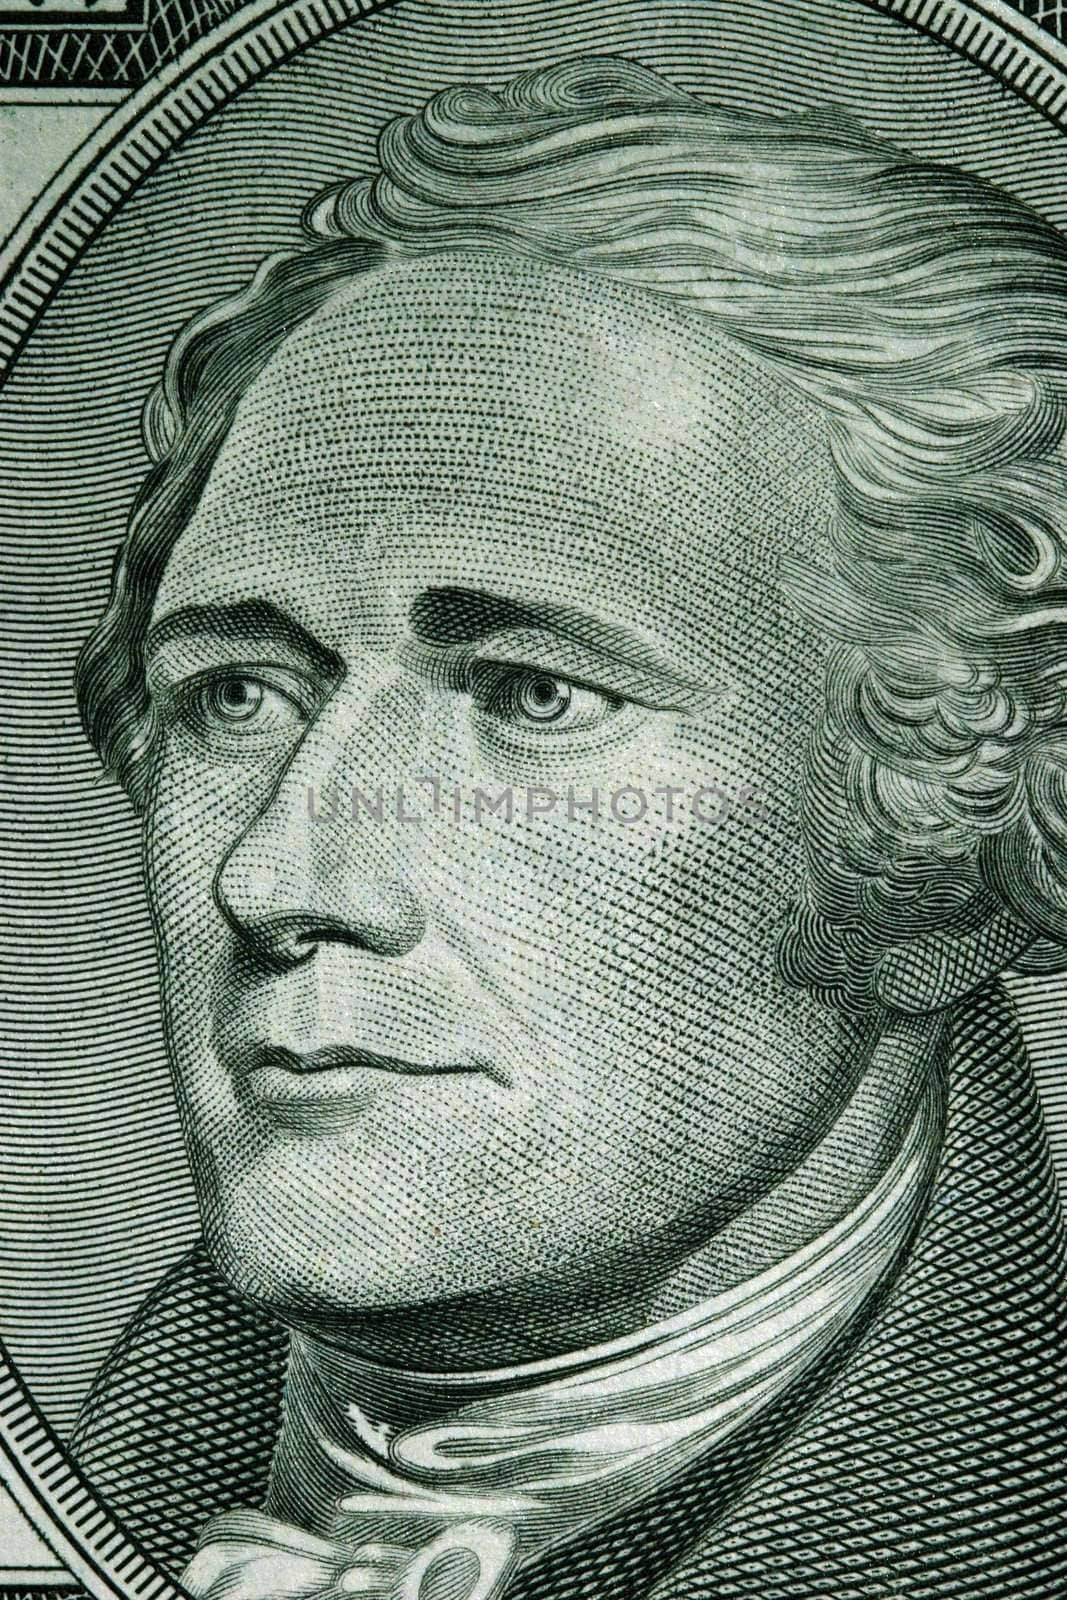 Macro of a ten dollar US bill with Hamilton